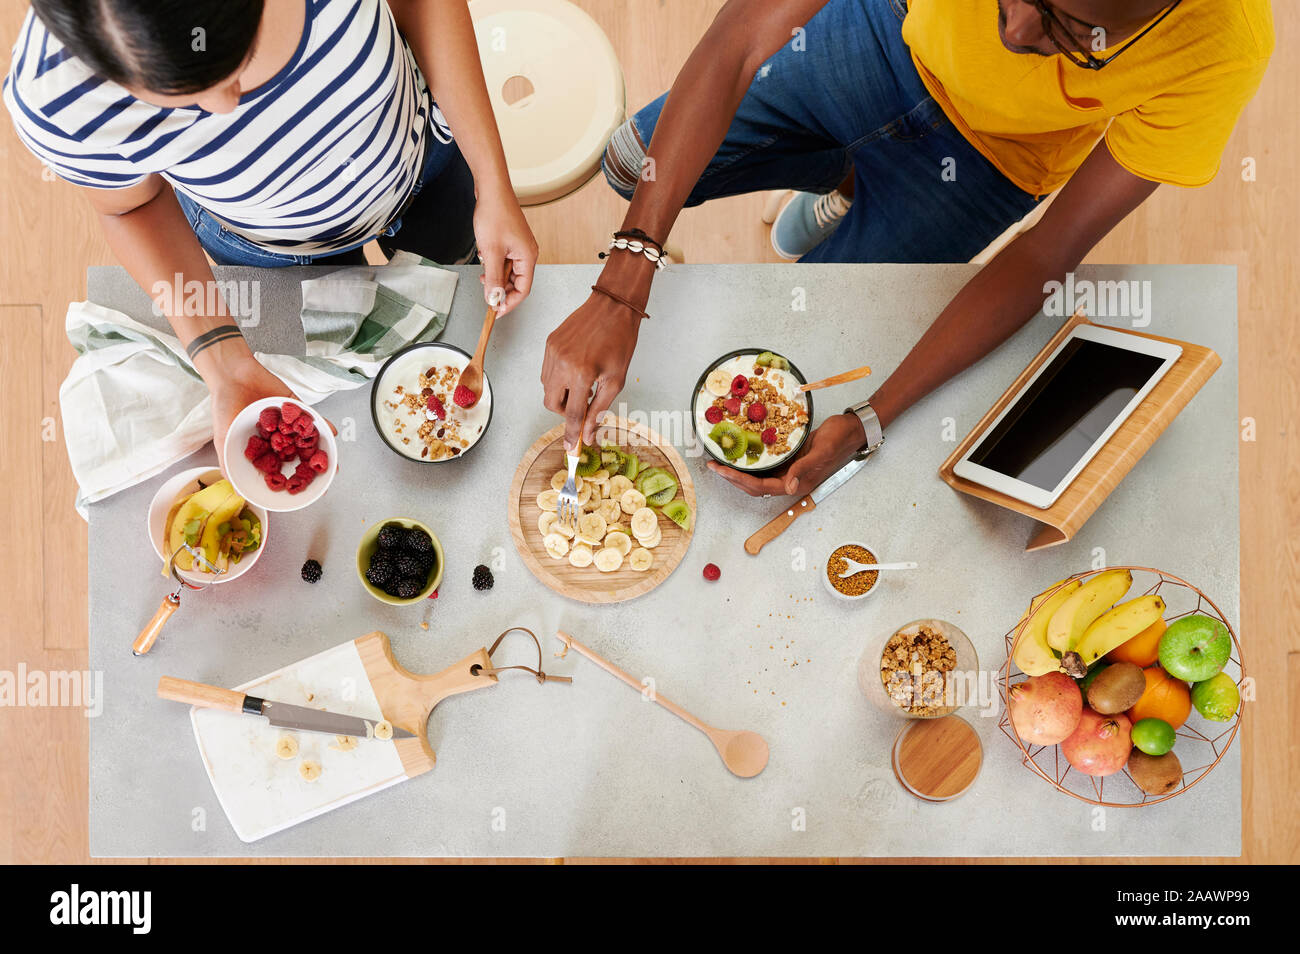 Coppia multietnica breakfasting insieme in cucina, dal di sopra Foto Stock